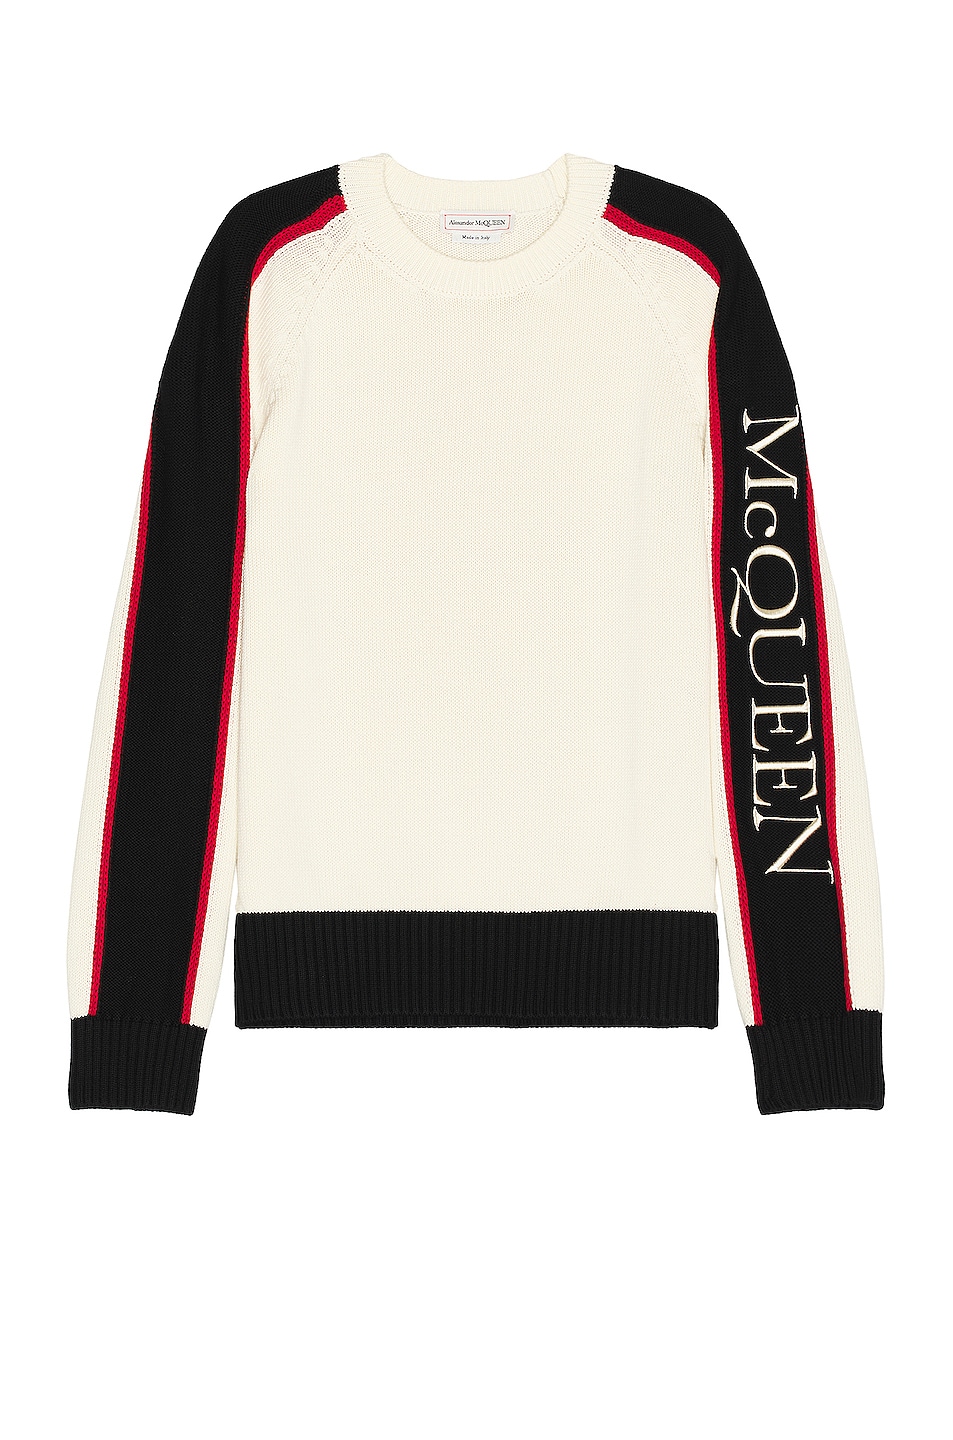 Image 1 of Alexander McQueen Crew Neck Long Sleeve in Ivory, Black, & Dk Red